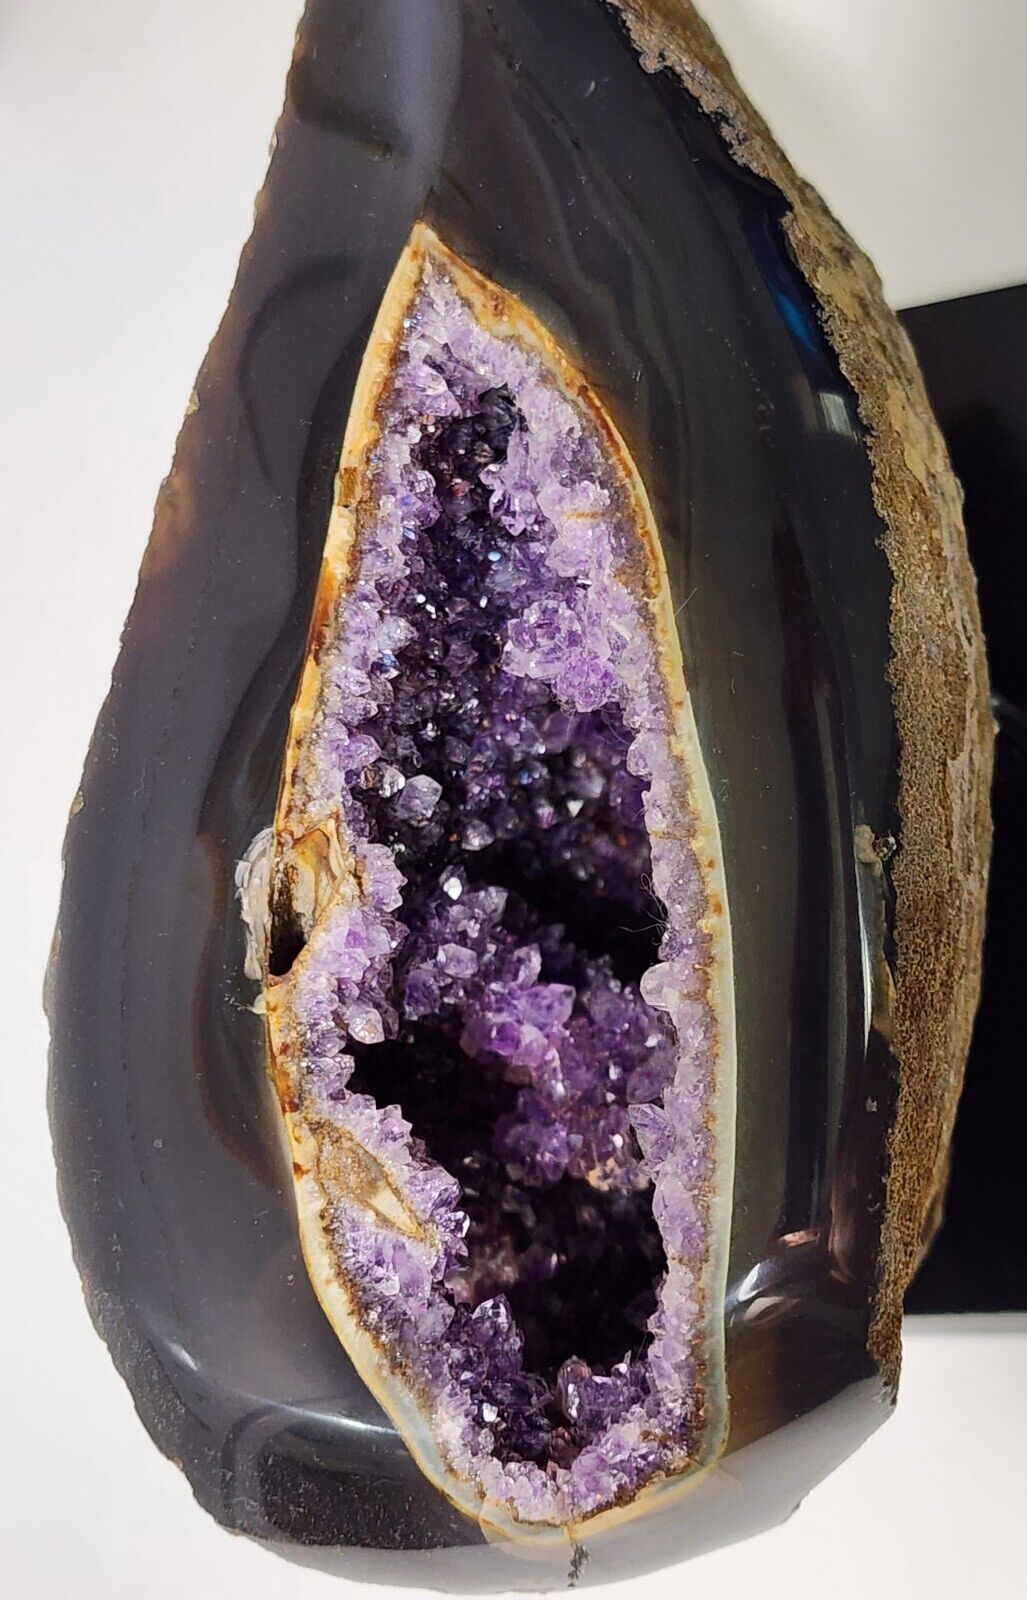 Stunning Amythist Crystal Peacock Eye Geode (2272 grams)